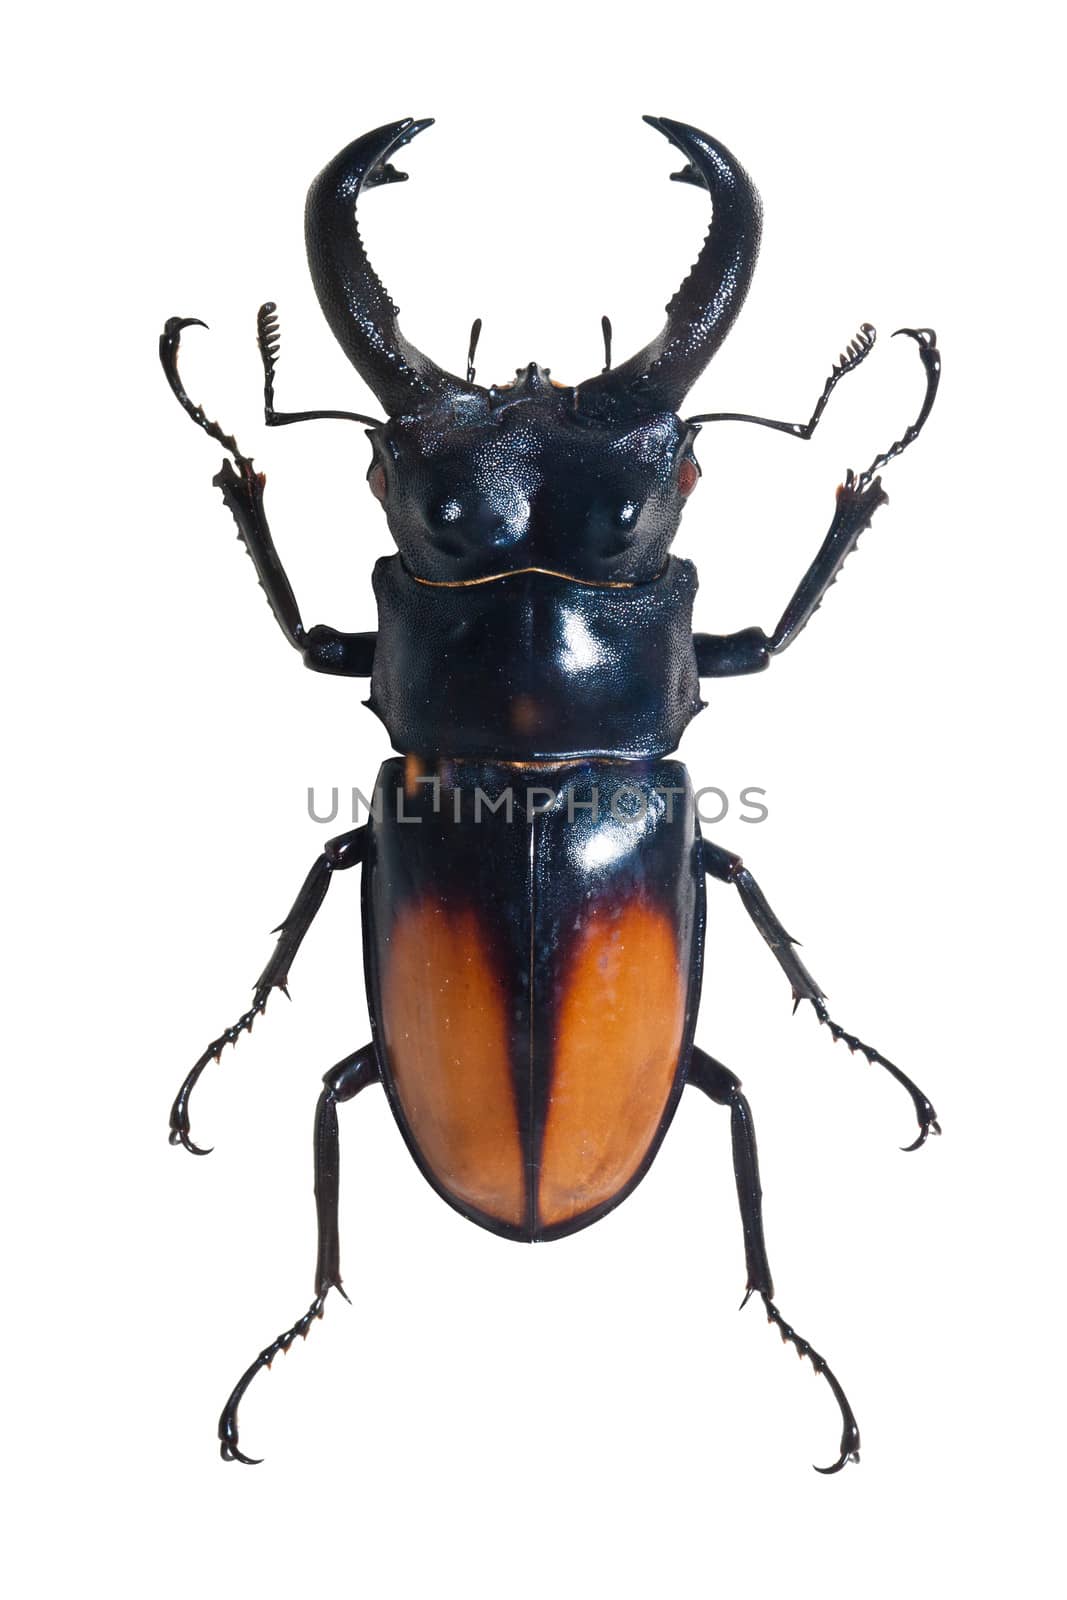 Huge bug with horns Odontolabis Spectabilis isolated on white background